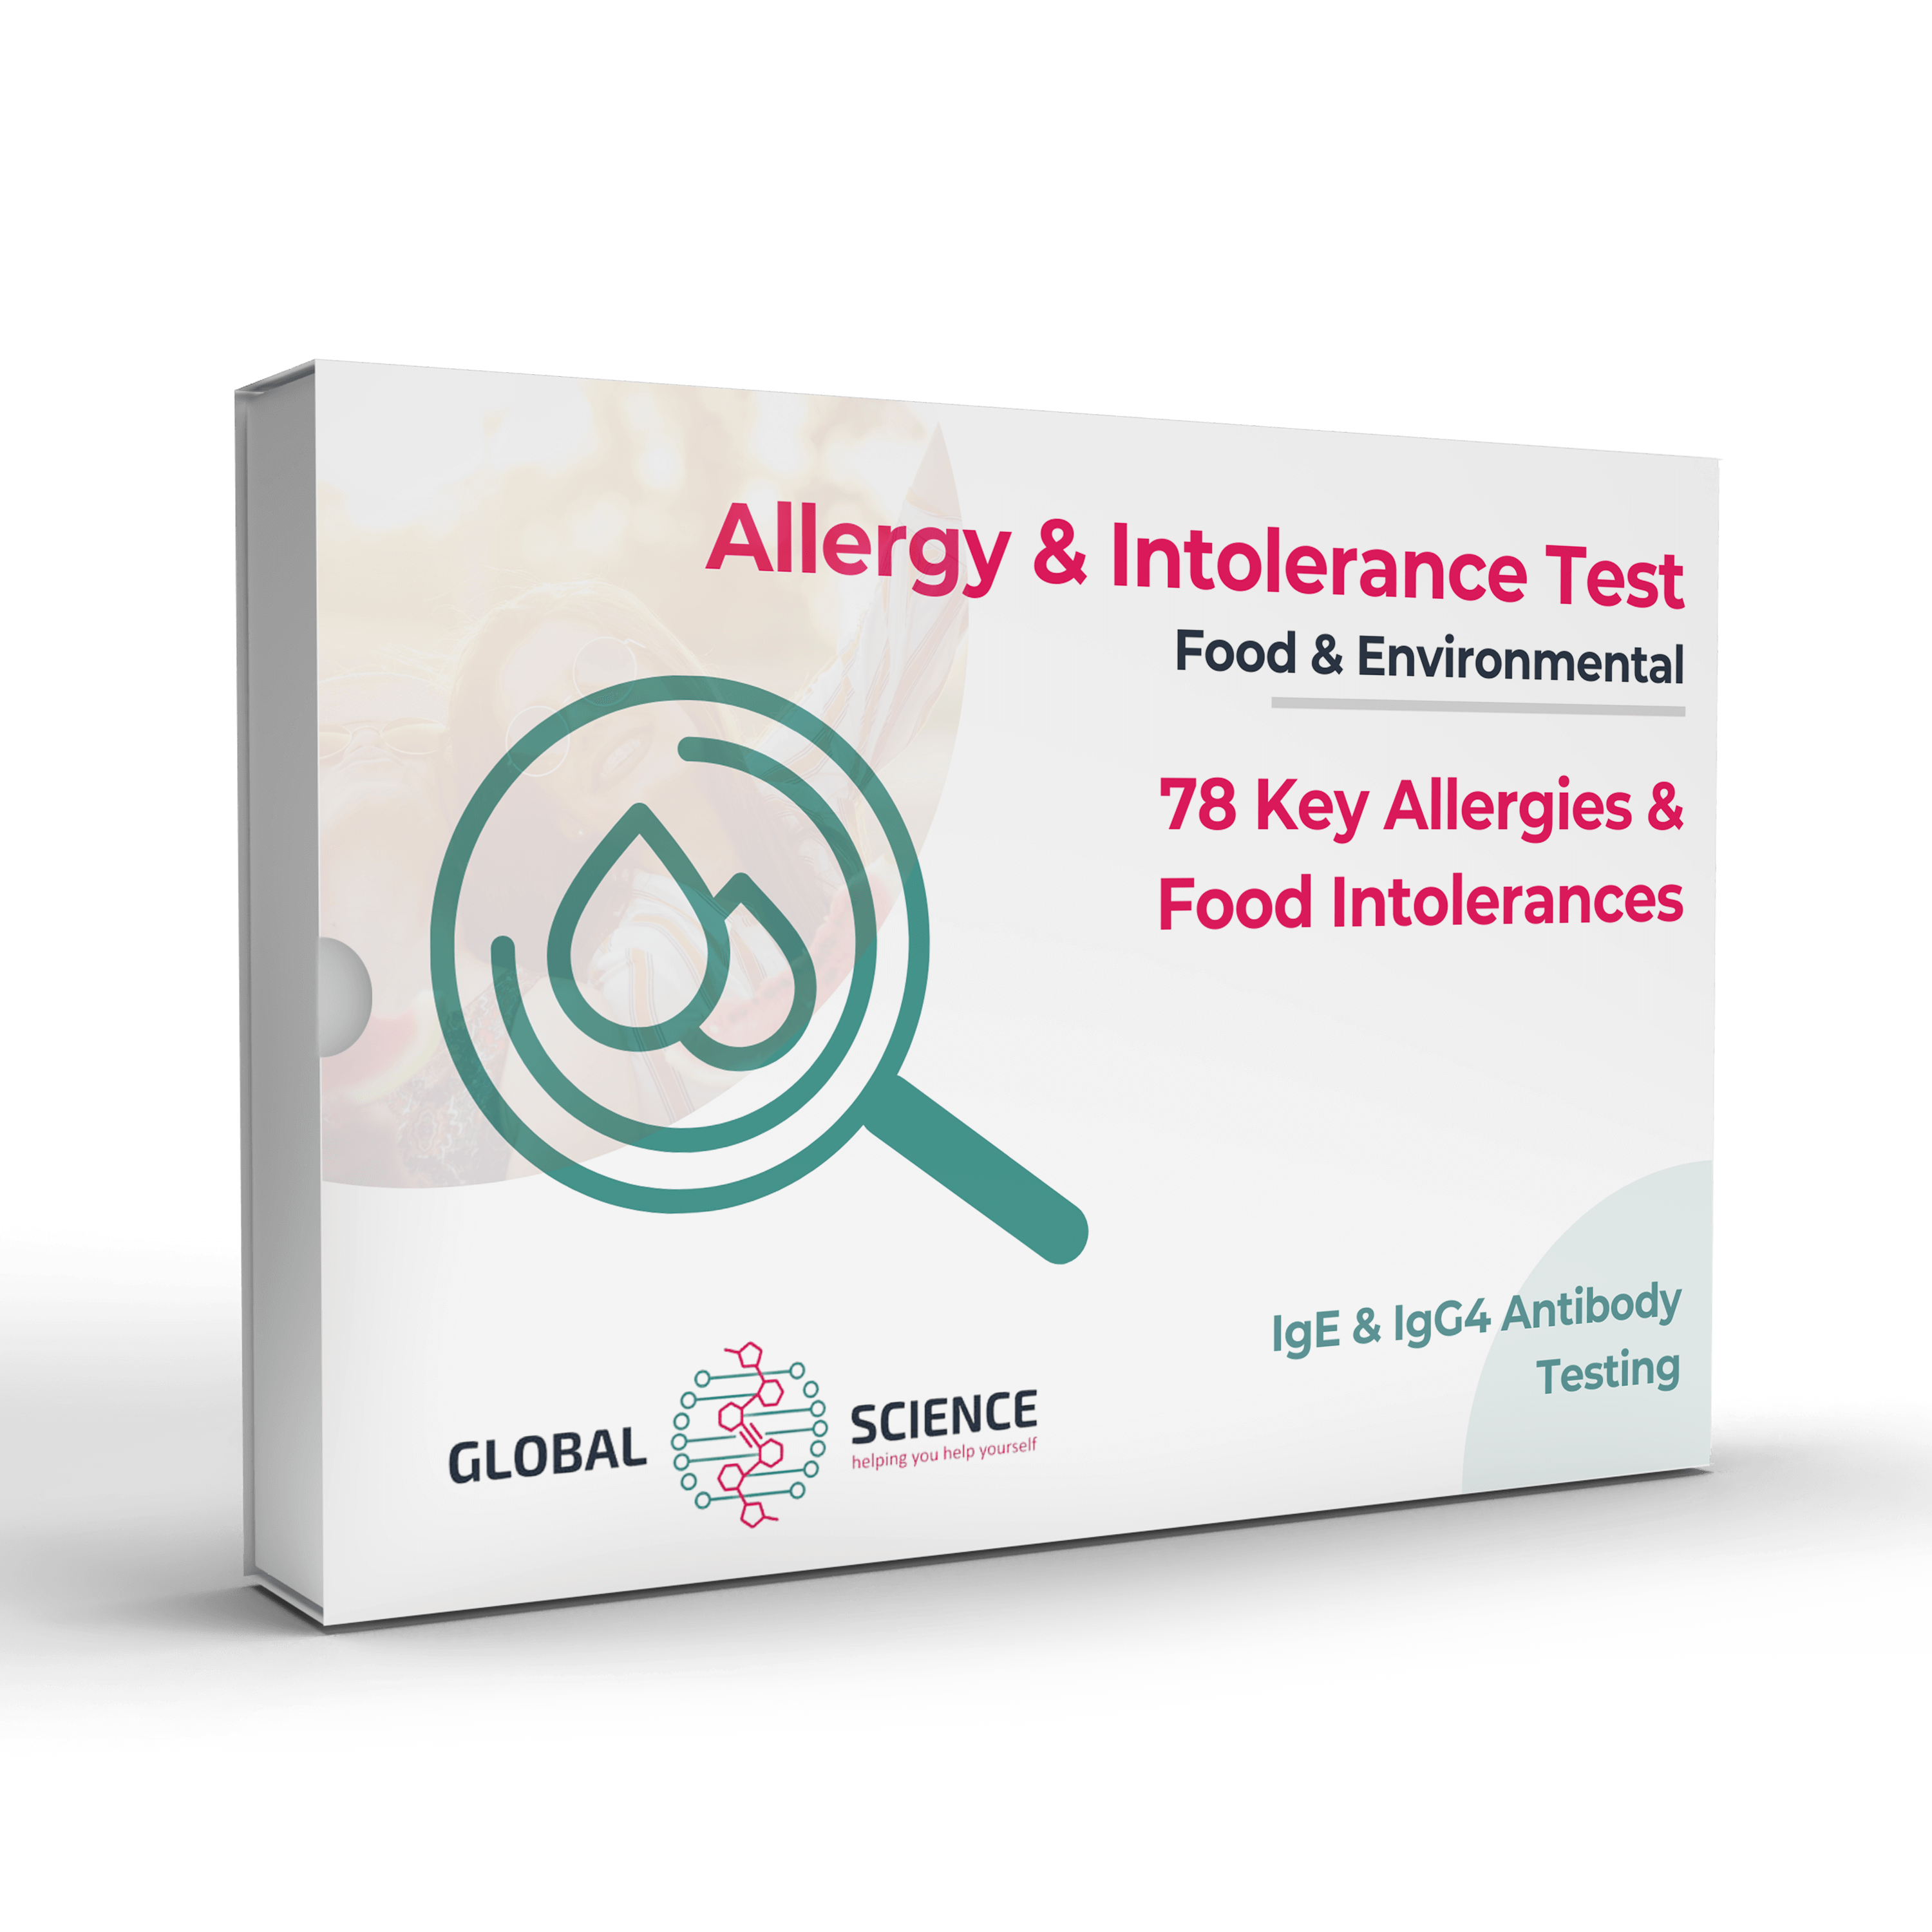 TMI TMA Allergy and Intolerance Test - Elimination diet following an allergy or intolerance test